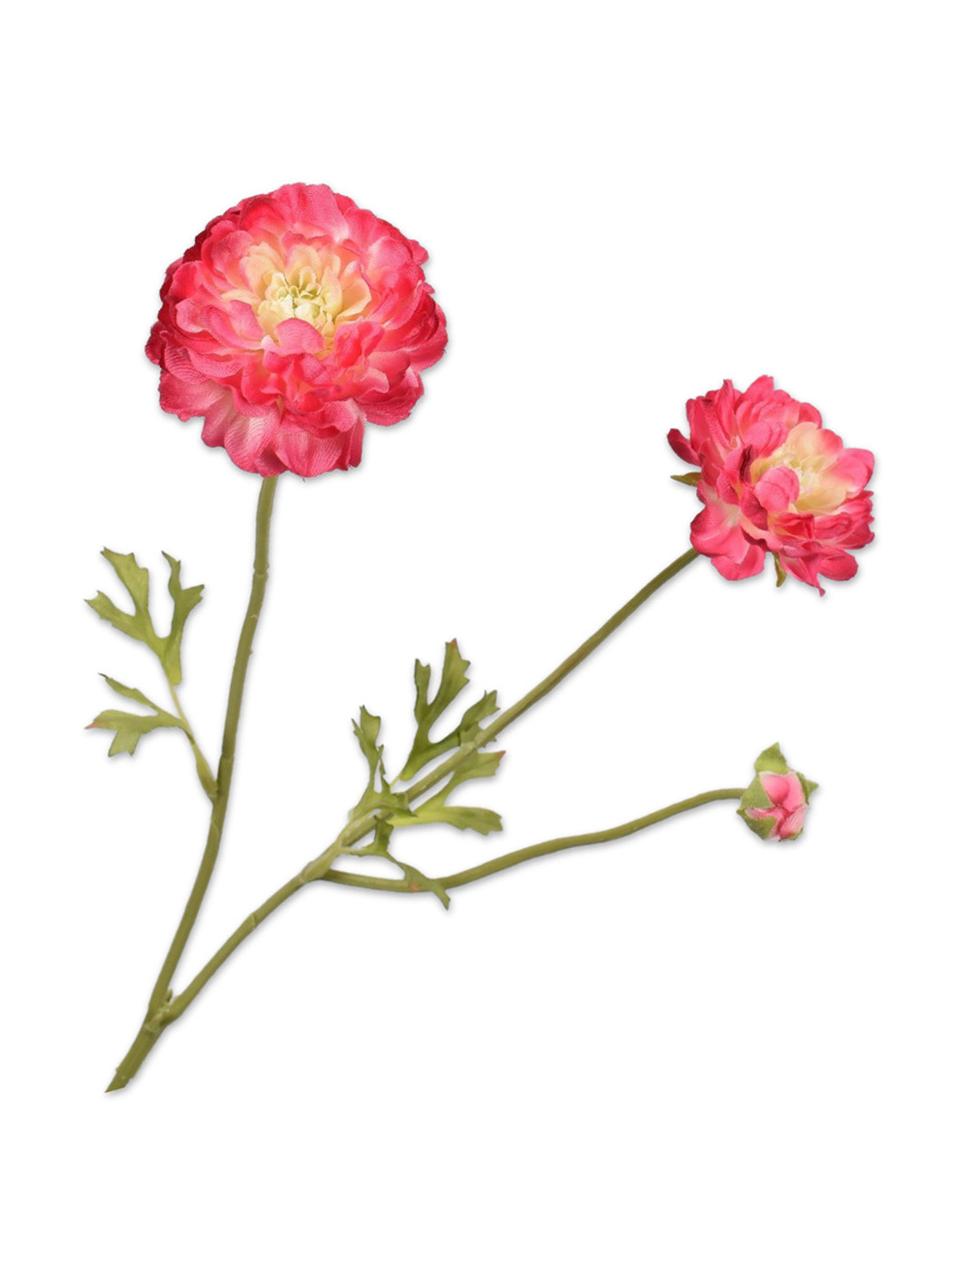 Kunstblumen Hahnenfuß, Pink, 2 Stück, Kunststoff, Metalldraht, Pnk, L 54 cm